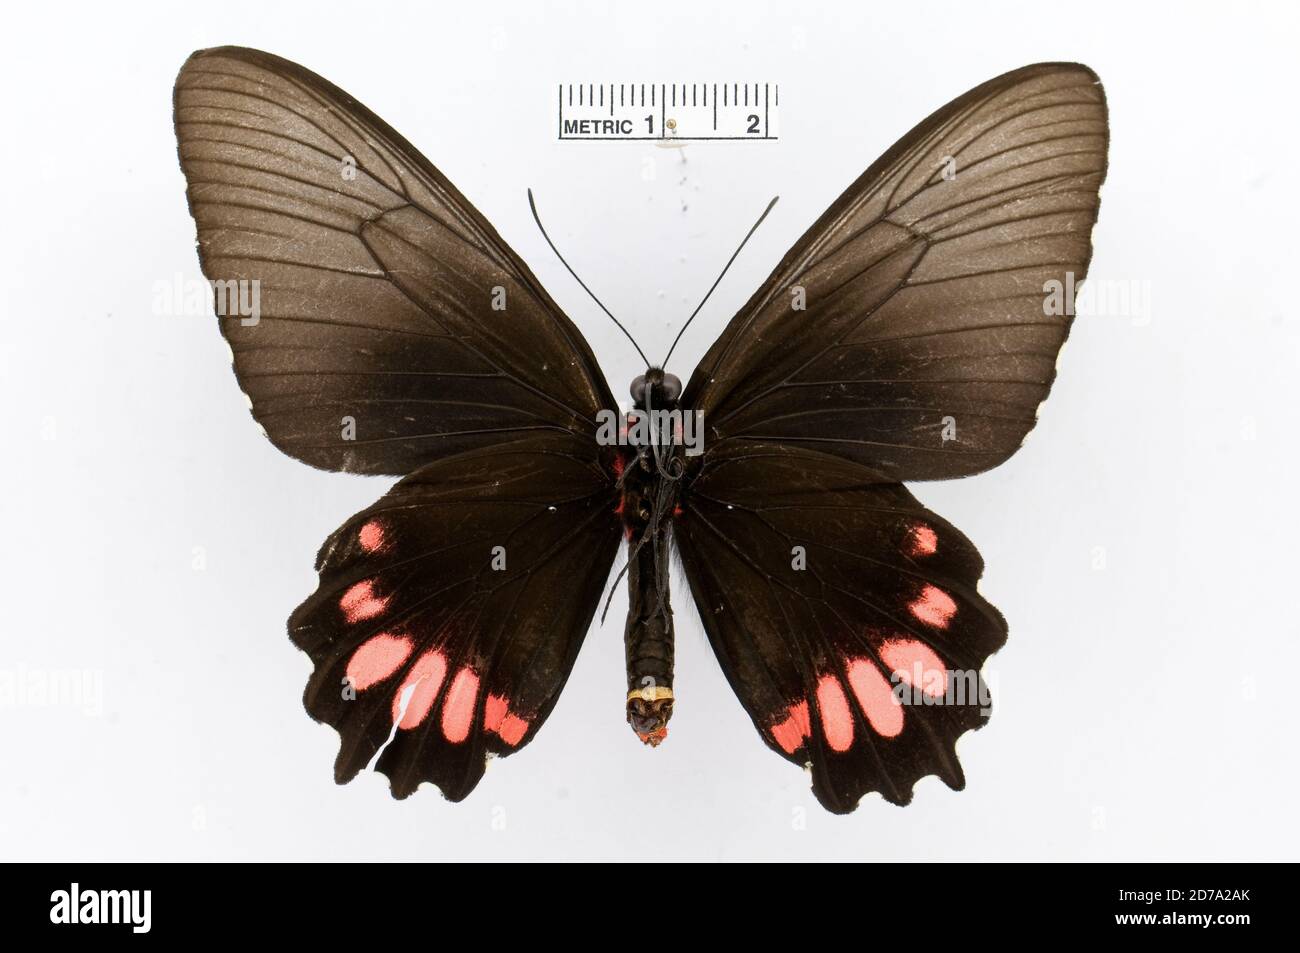 Punaisé, Parides orellana, Animas, Arthropoda, Insecta, Lepidoptera, Papilionidae, Papilioninae Banque D'Images